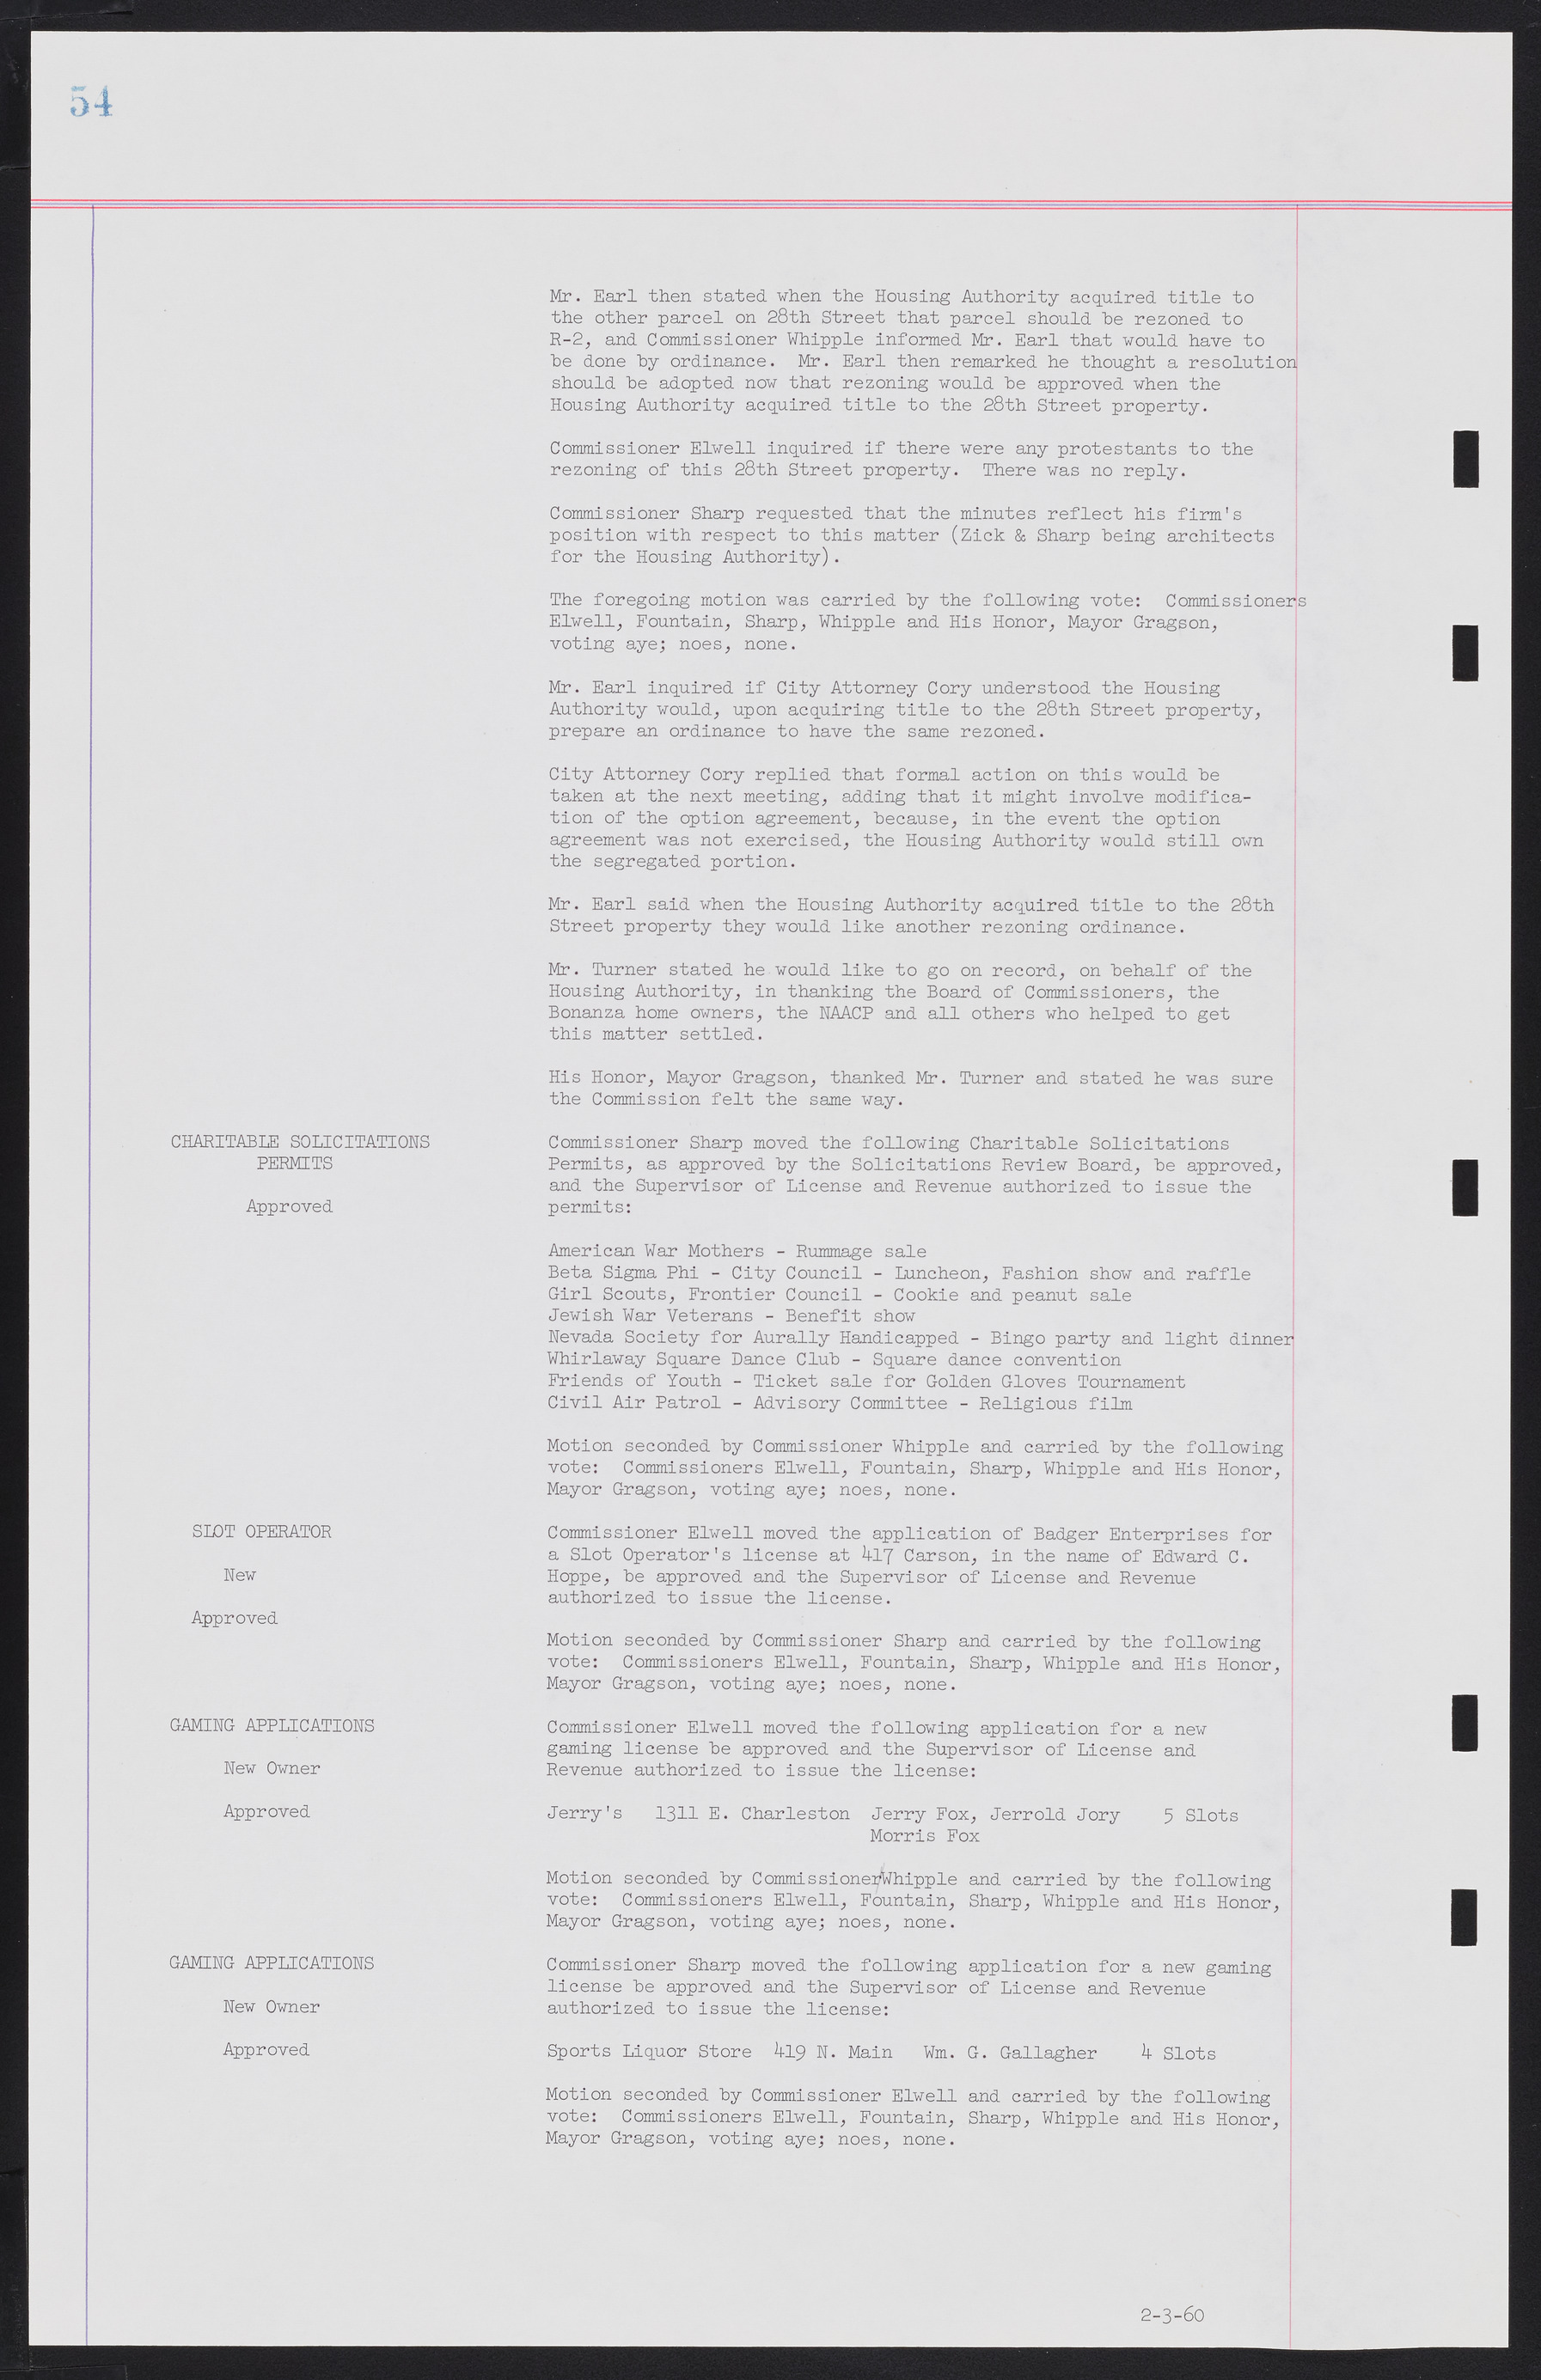 Las Vegas City Commission Minutes, December 8, 1959 to February 17, 1960, lvc000012-58